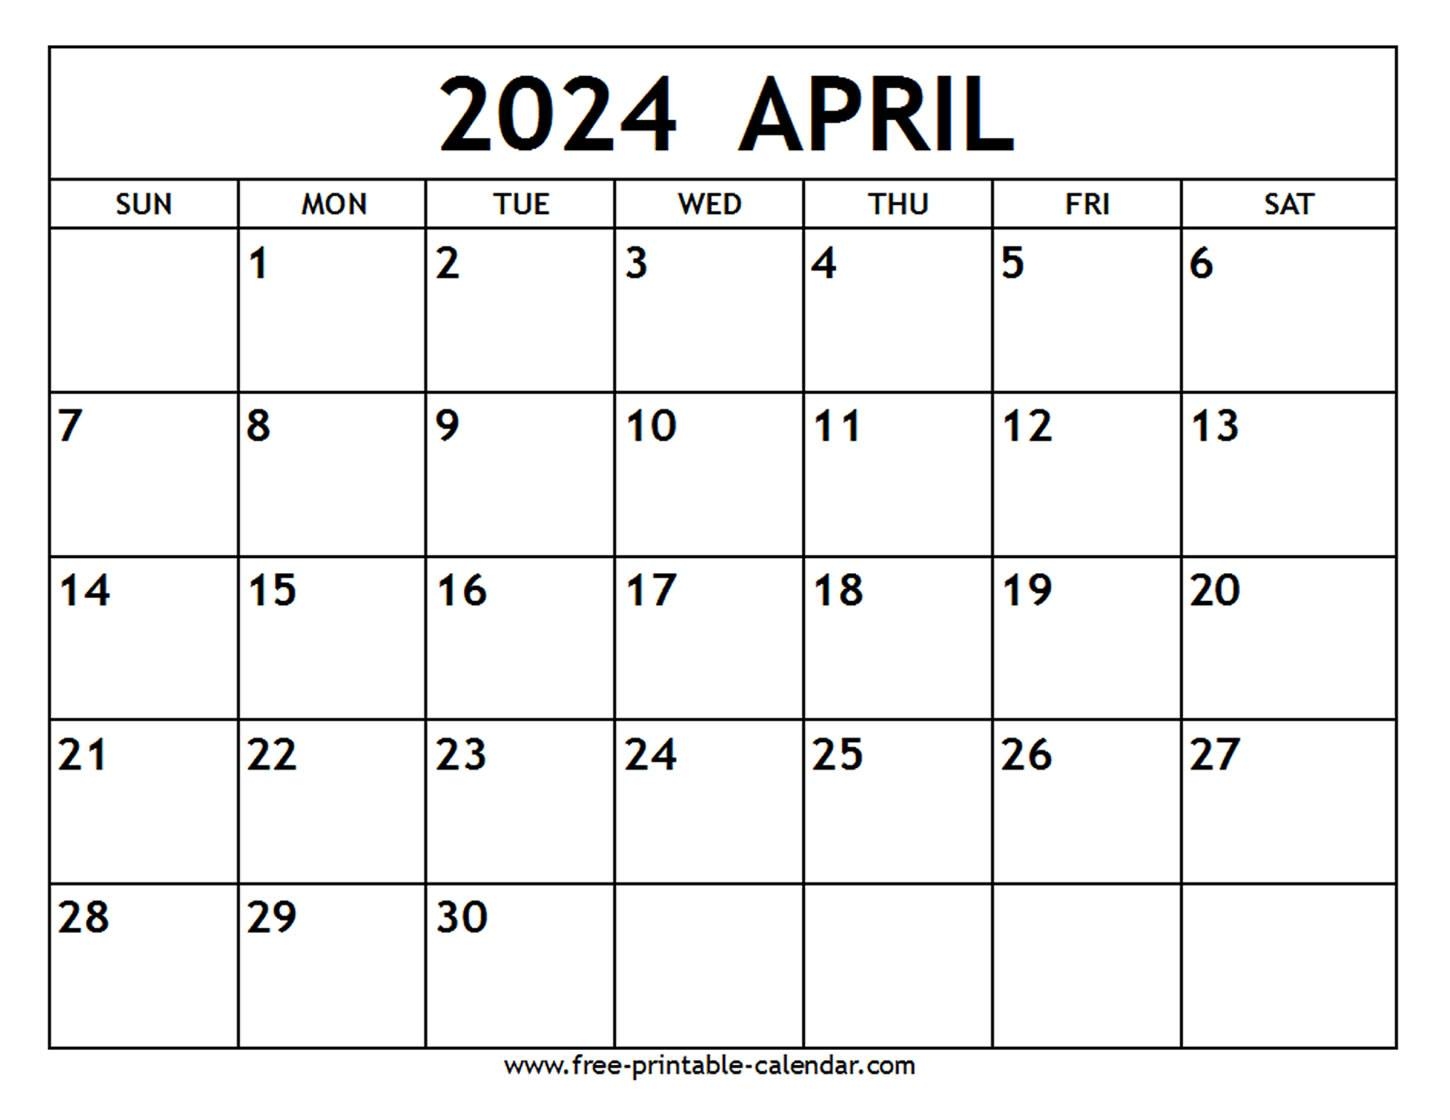 April 2024 Calendar - Free-Printable-Calendar intended for Free Printable April 2024 Calendar Templates